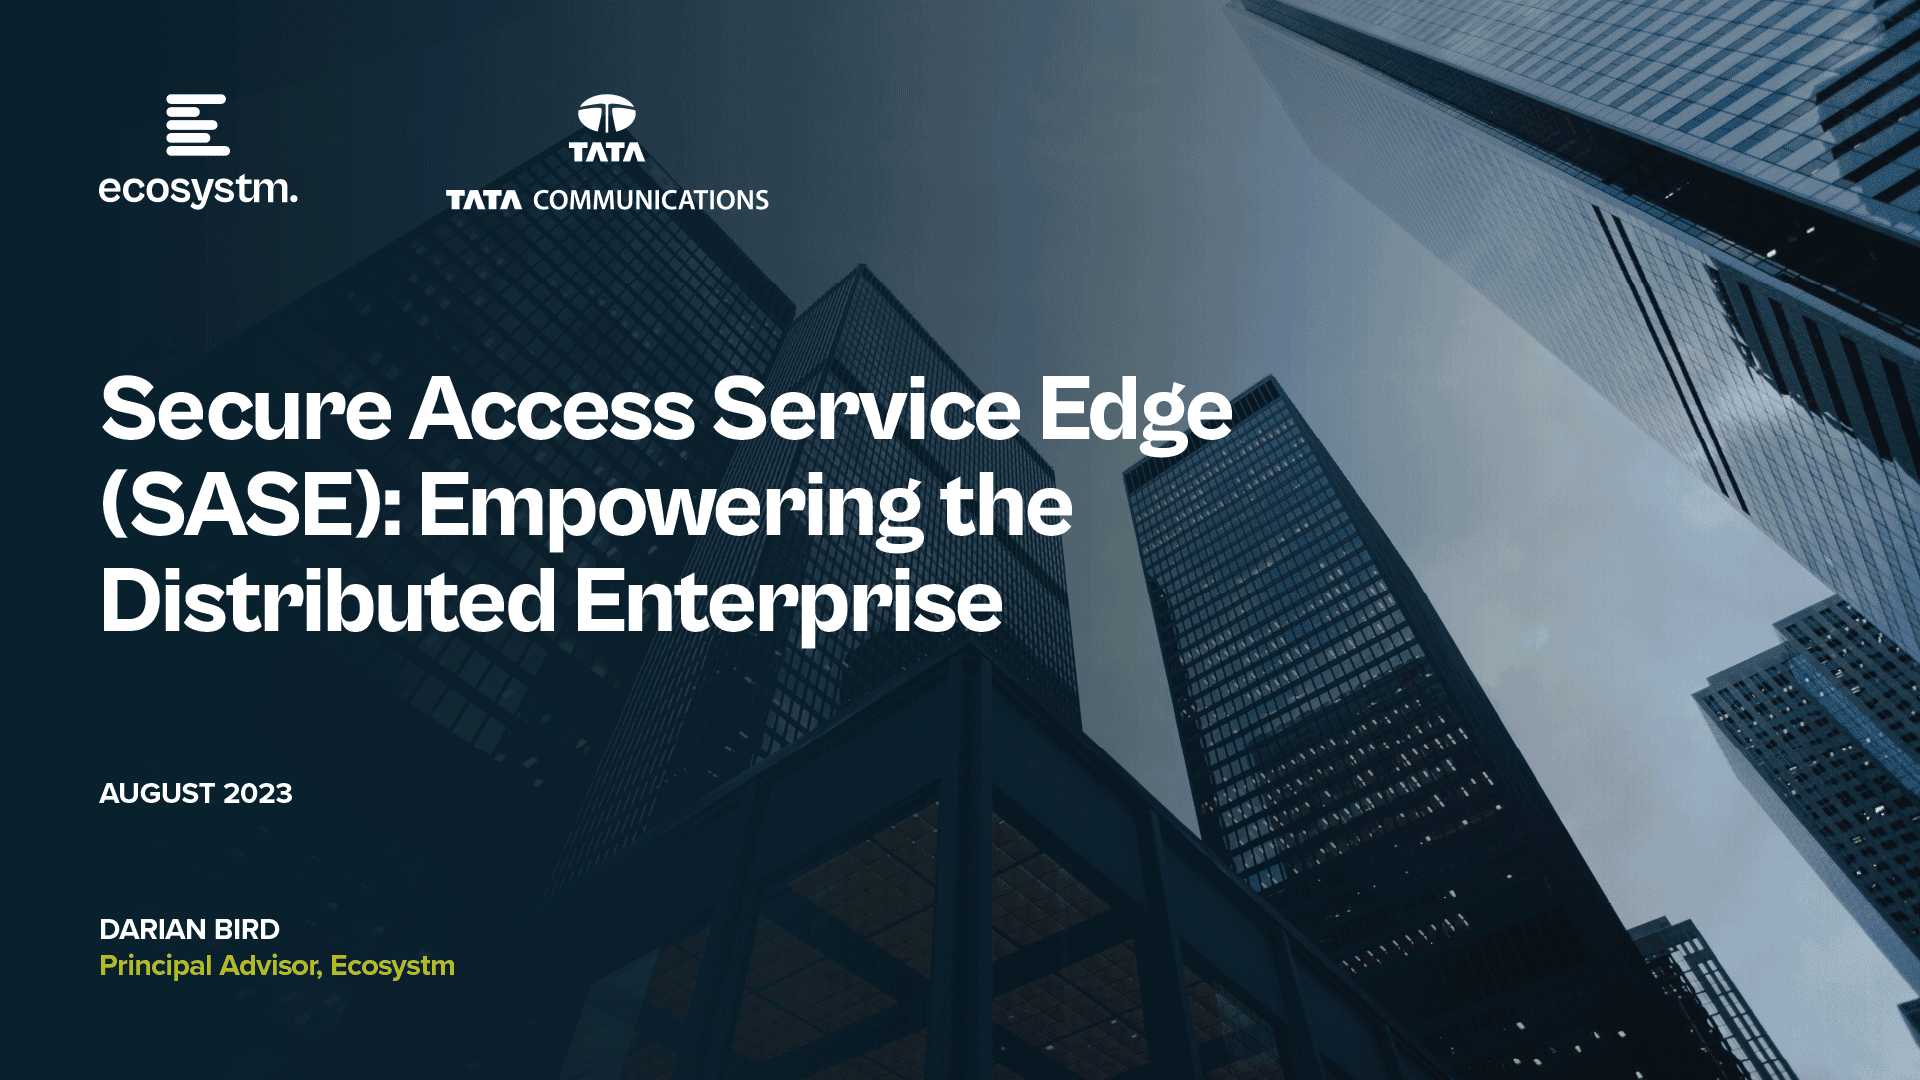 ebook-SASE Empowering the Distributed Enterprise-Tata-Ecosystm